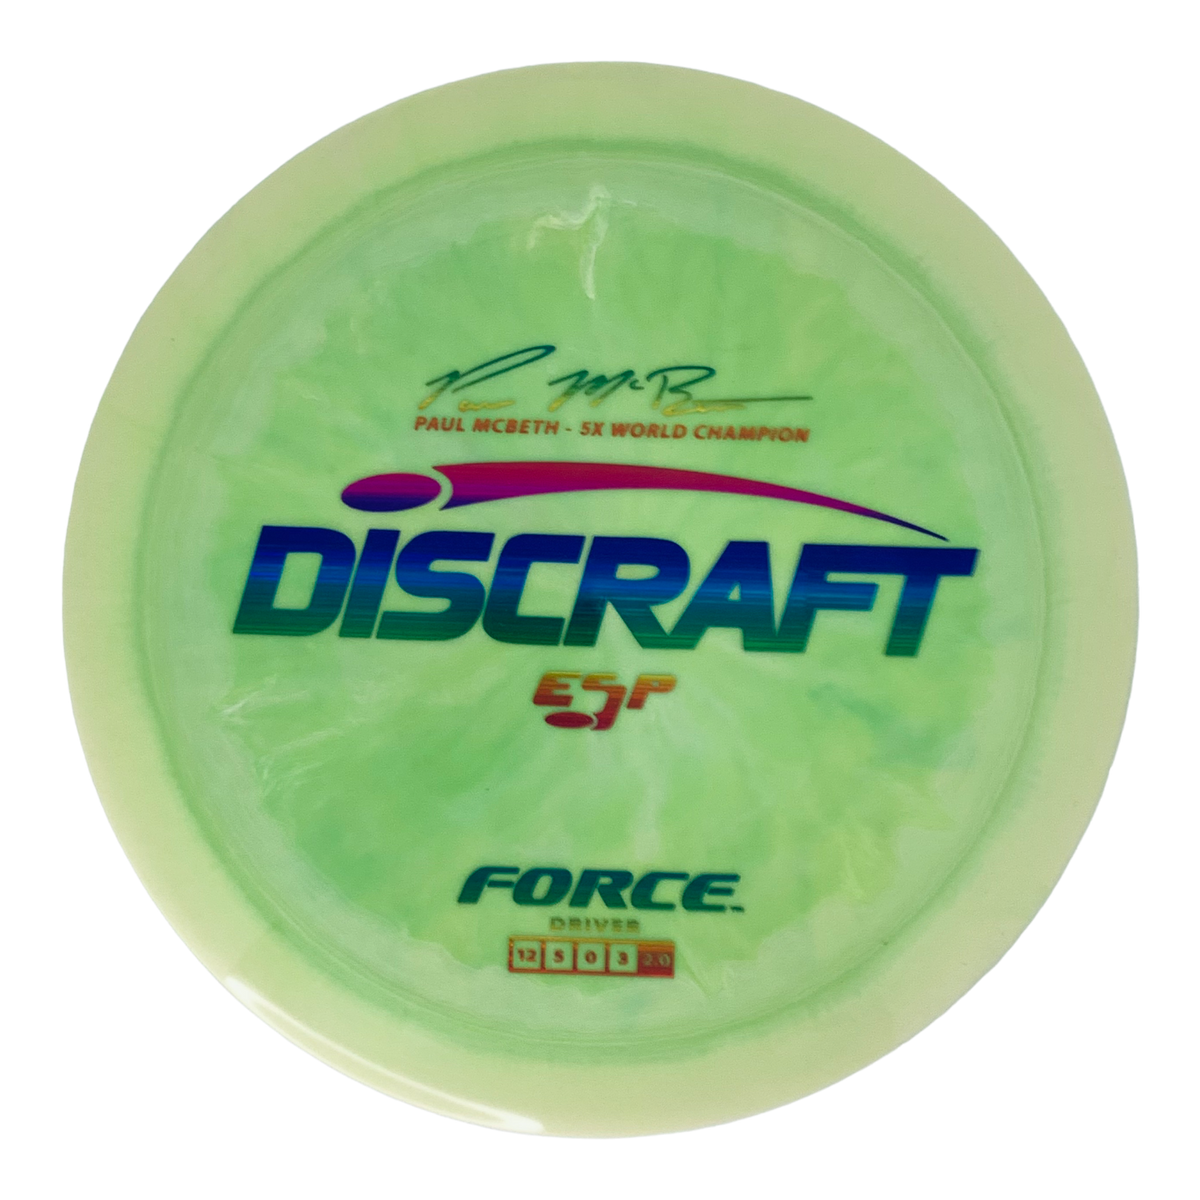 Discraft ESP Force - Mcbeth 5x Signature